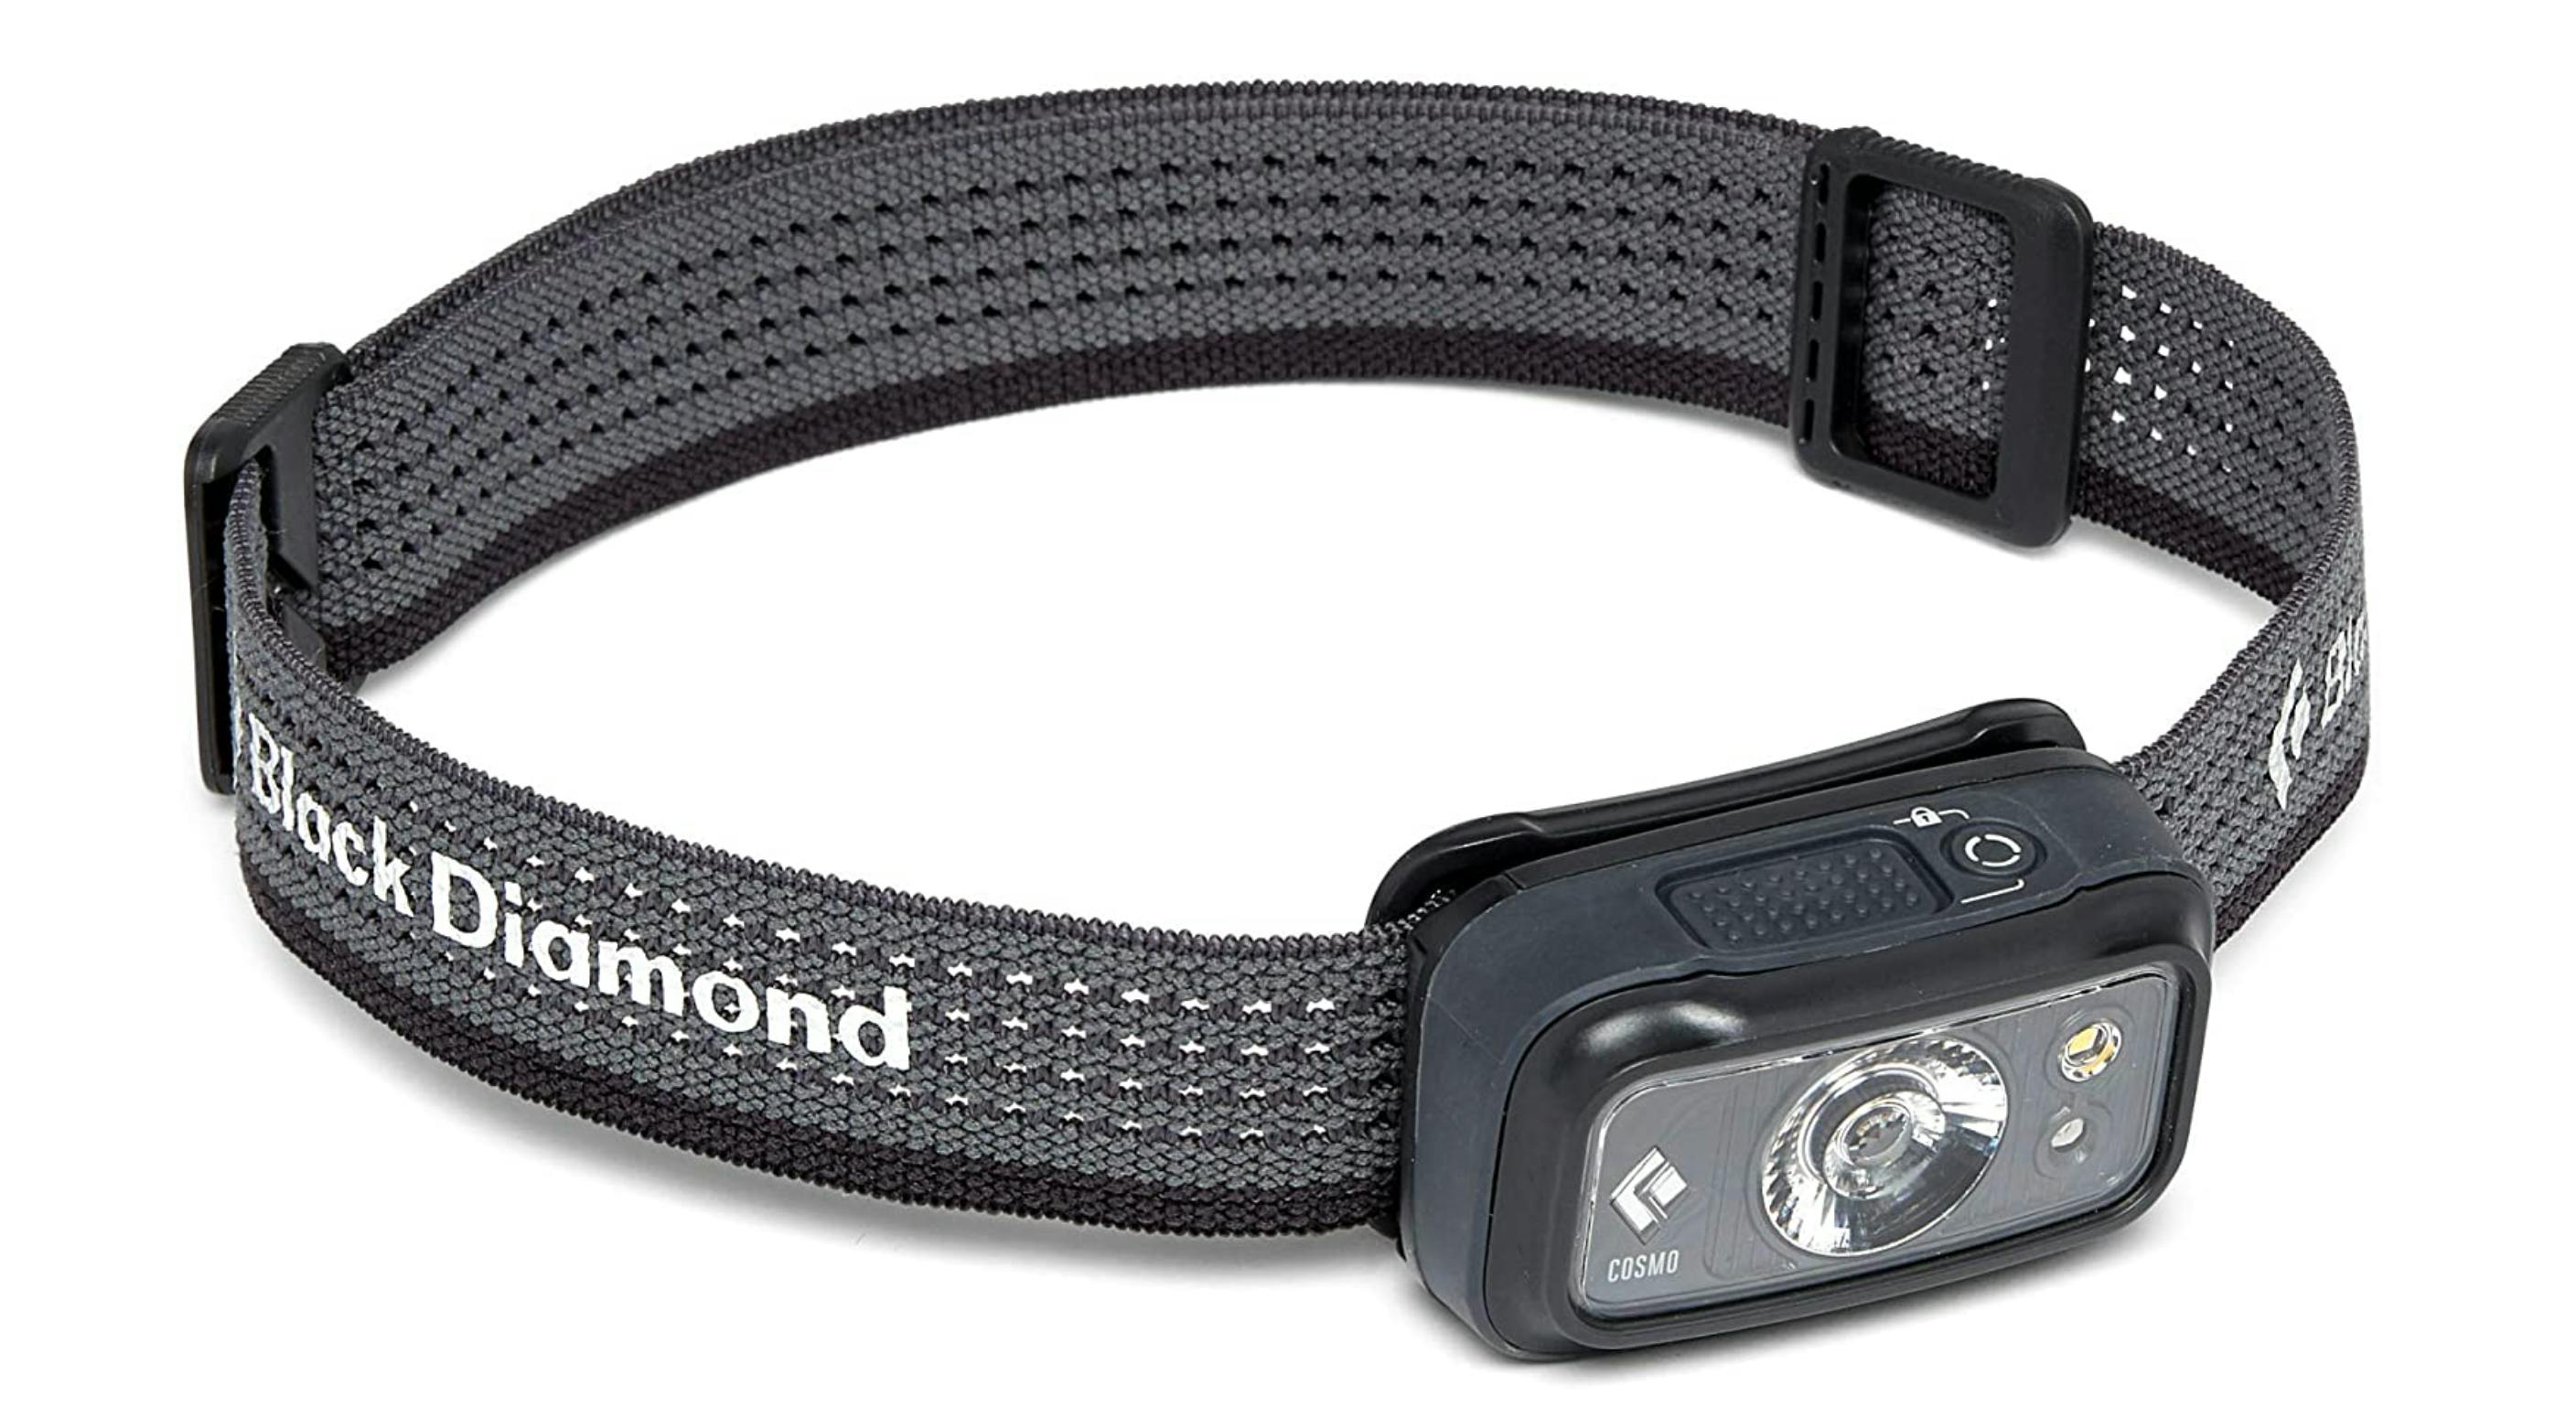 Product image of the Black Diamond Cosmo 300 Headlamp.